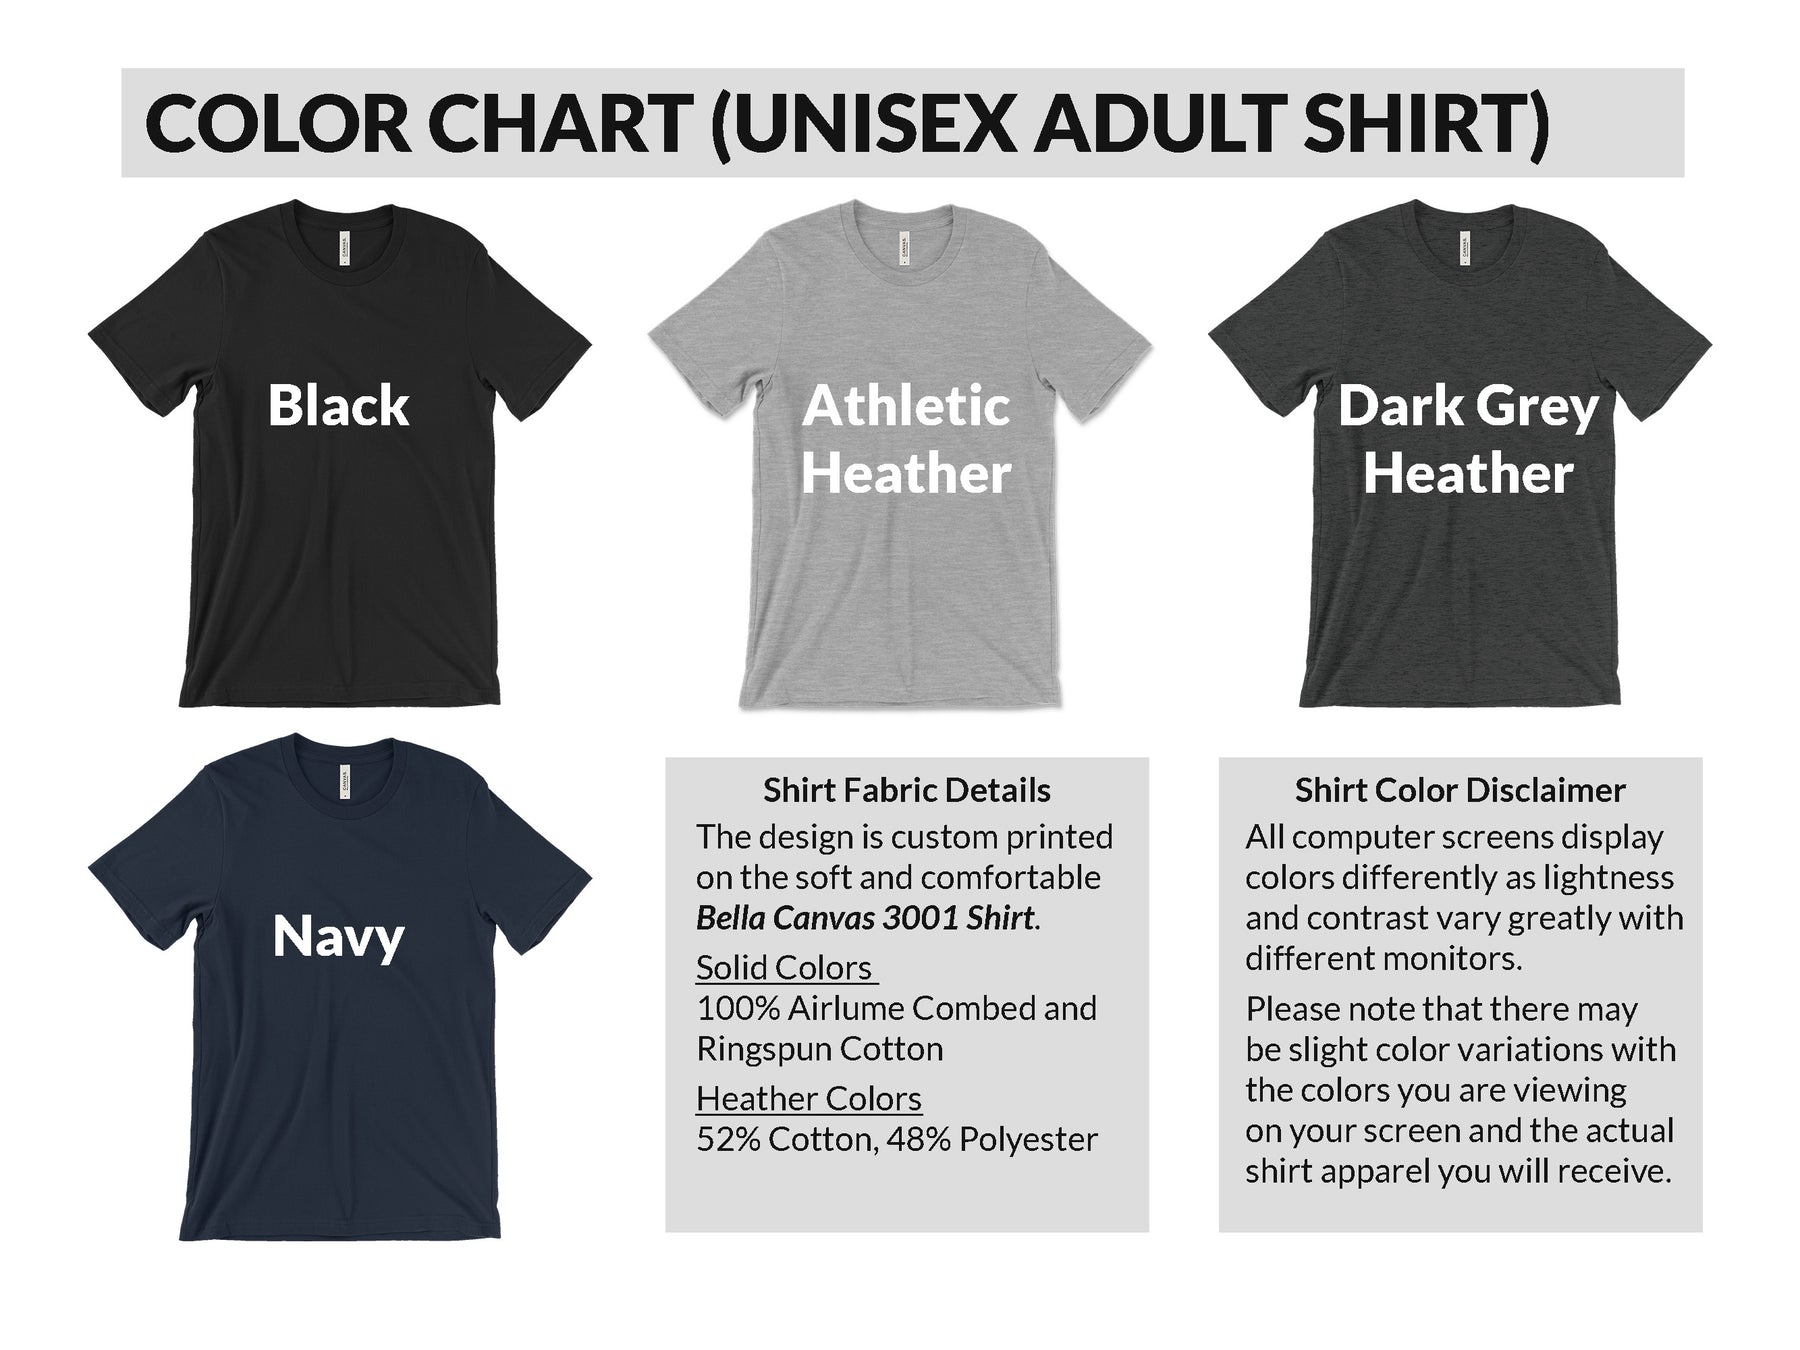 World's Best Uncle Heather Grey Adult T-Shirt - Medium 